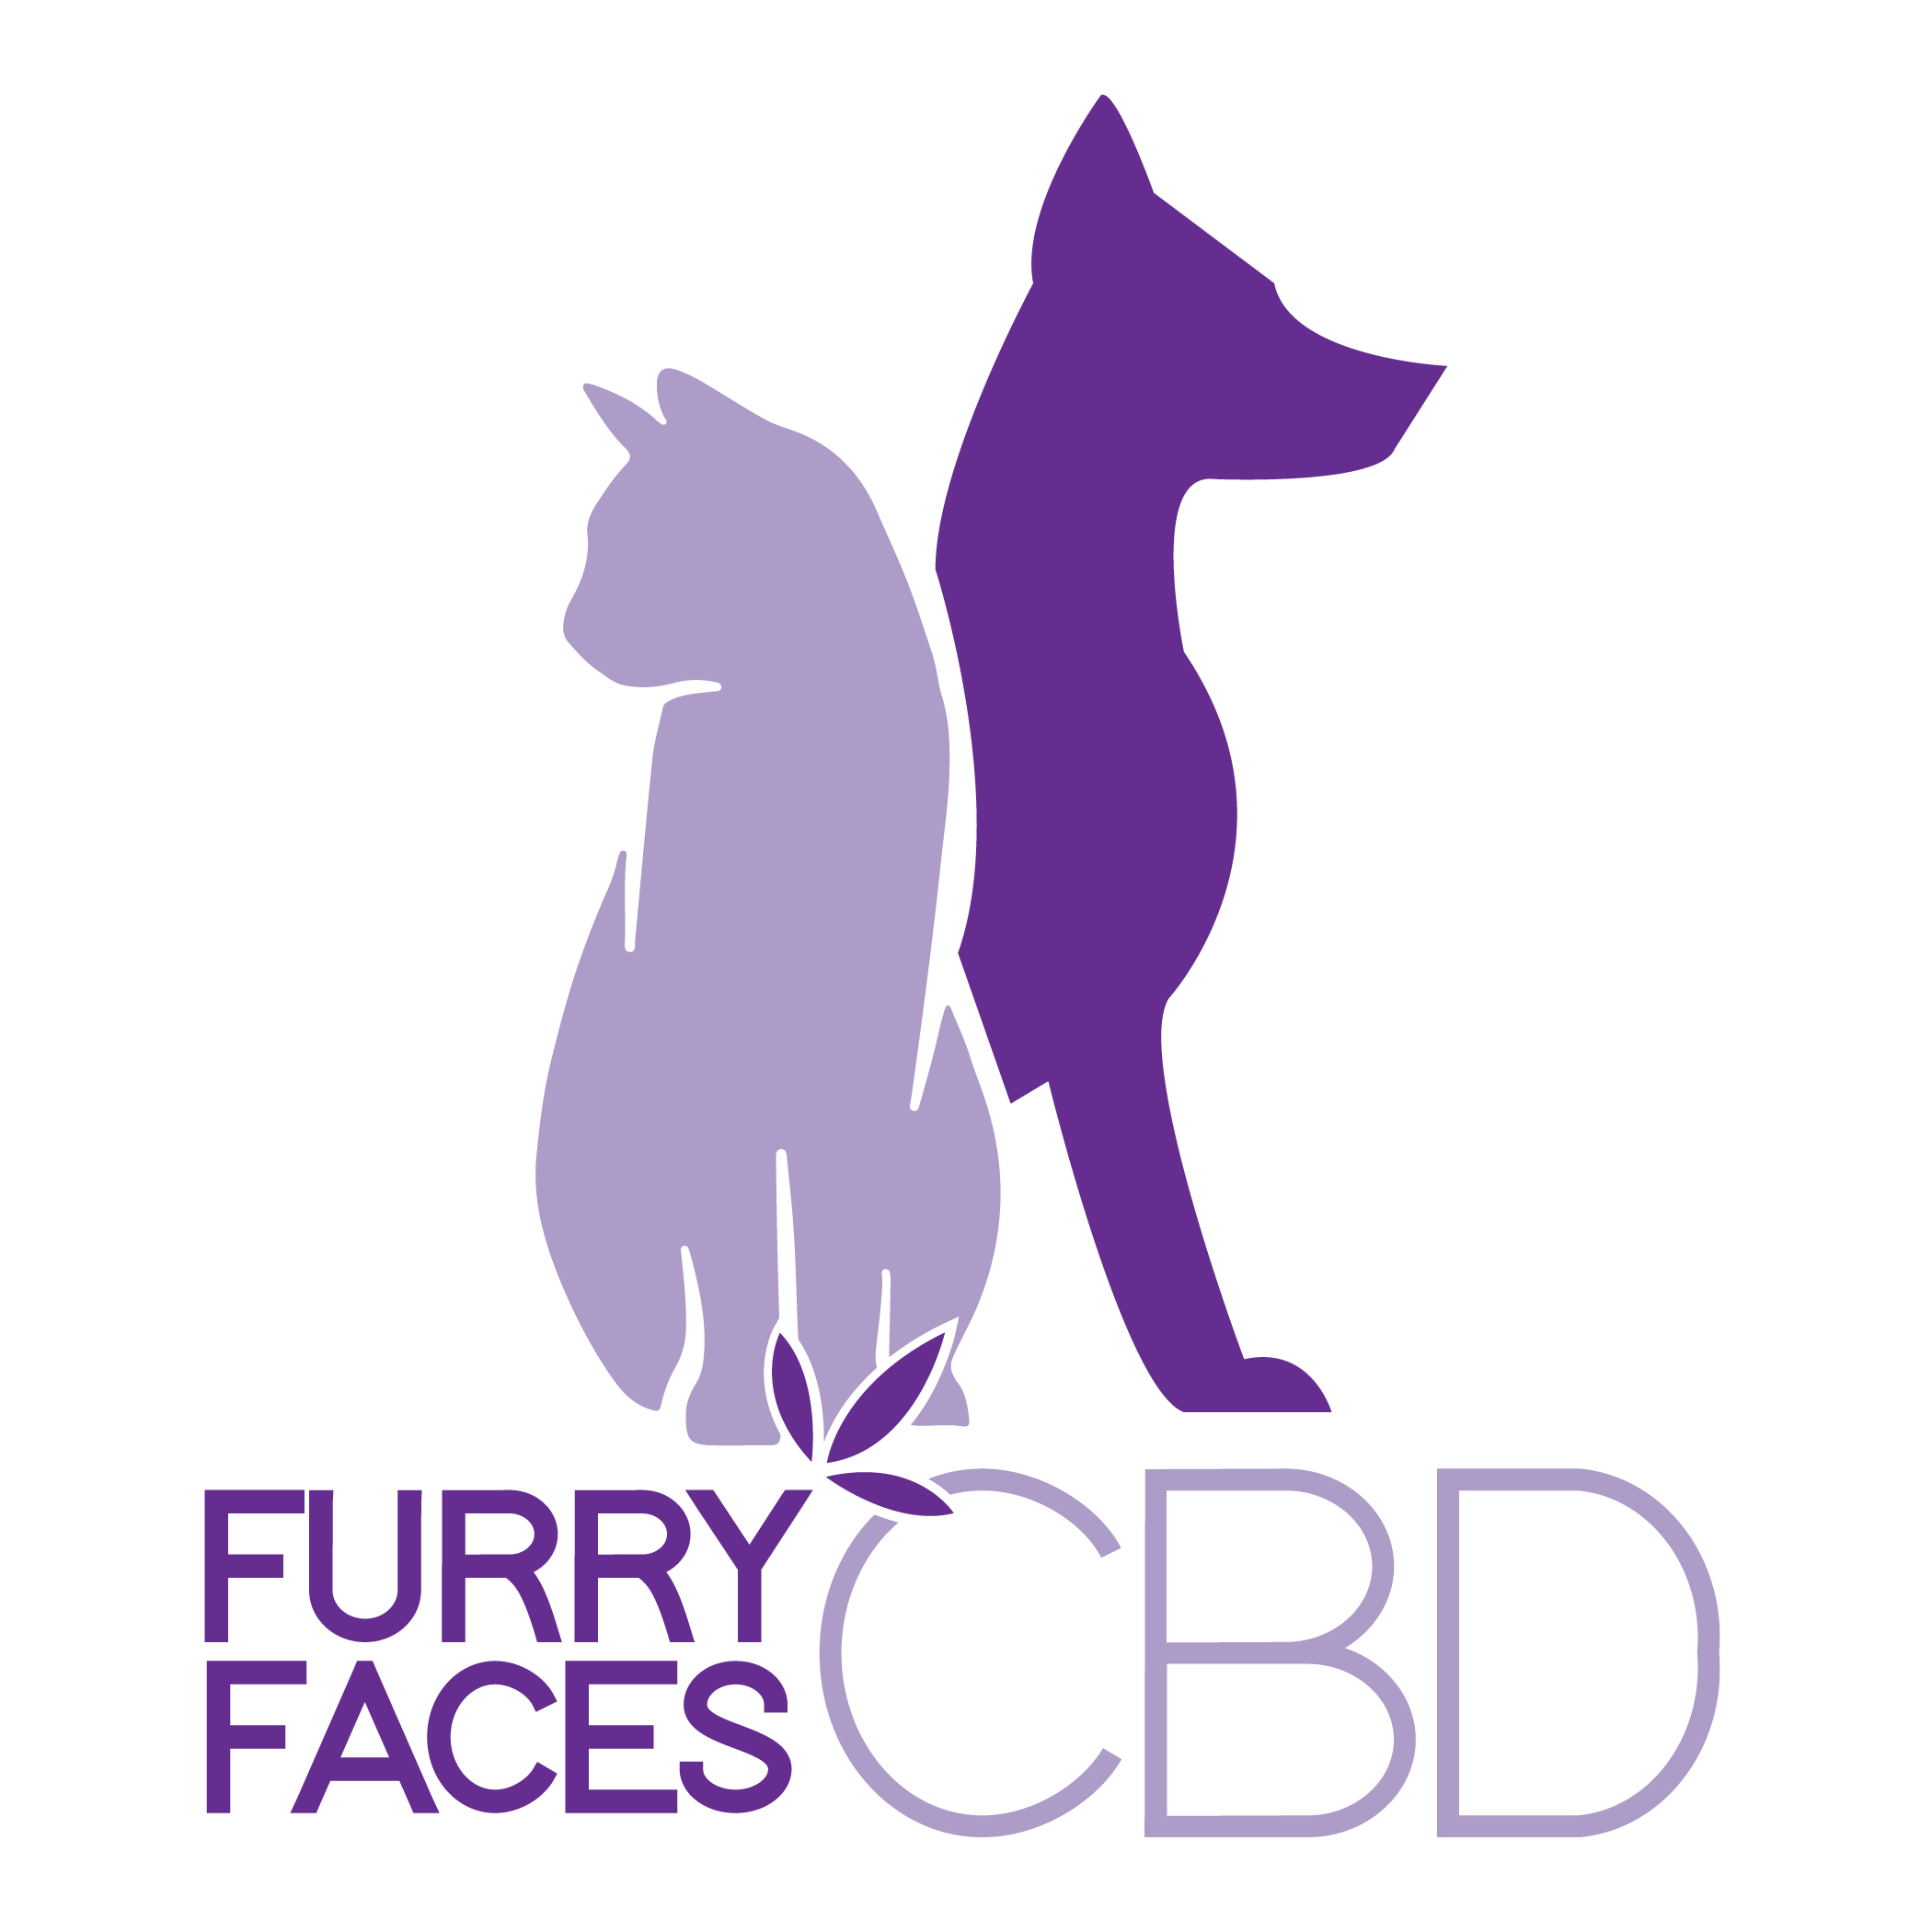 Furry Faces Pet CBD